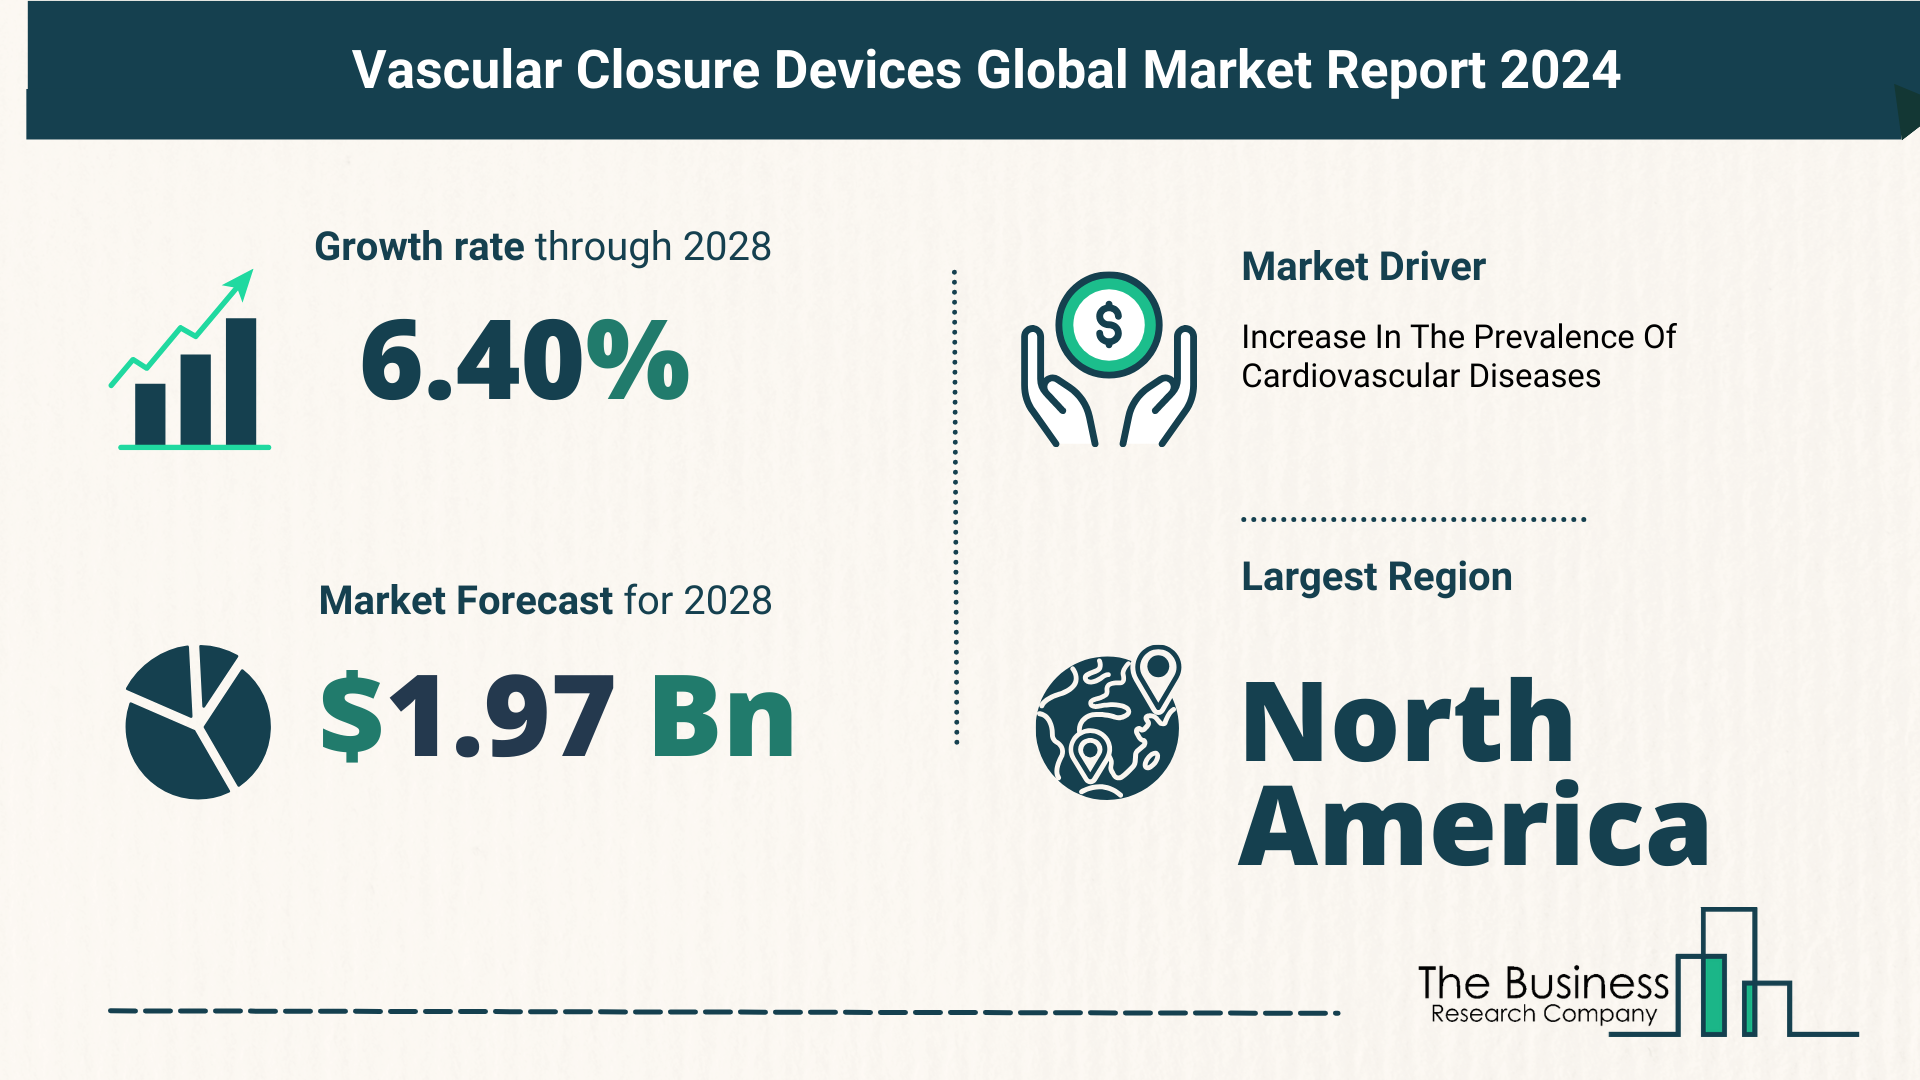 Global Vascular Closure Devices Market